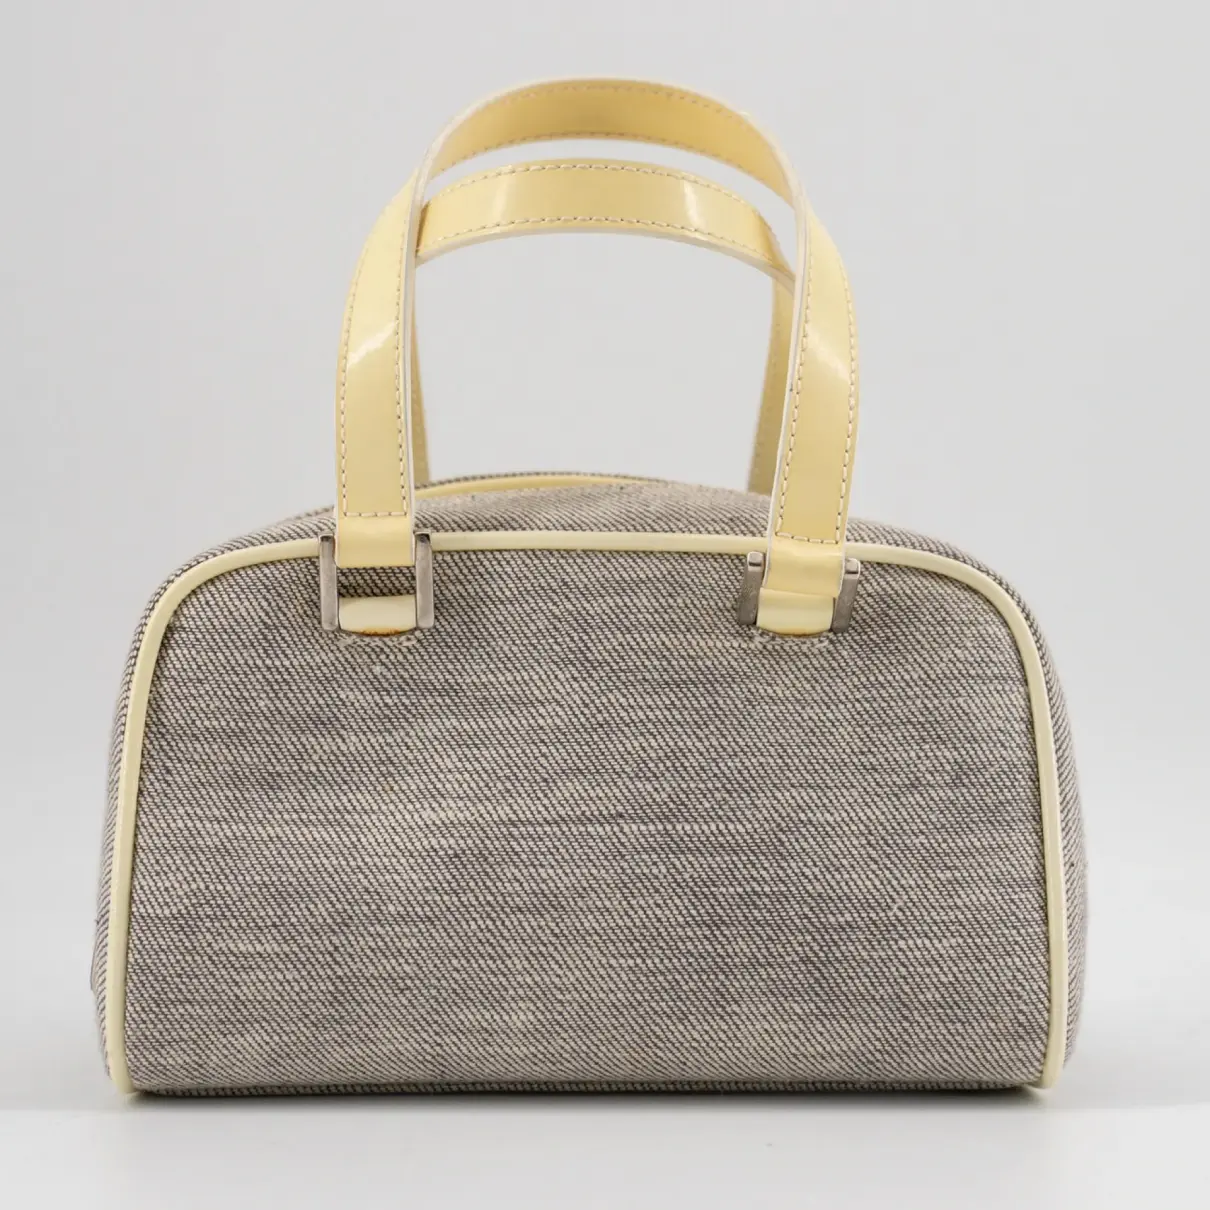 Buy Dior Malice leather handbag online